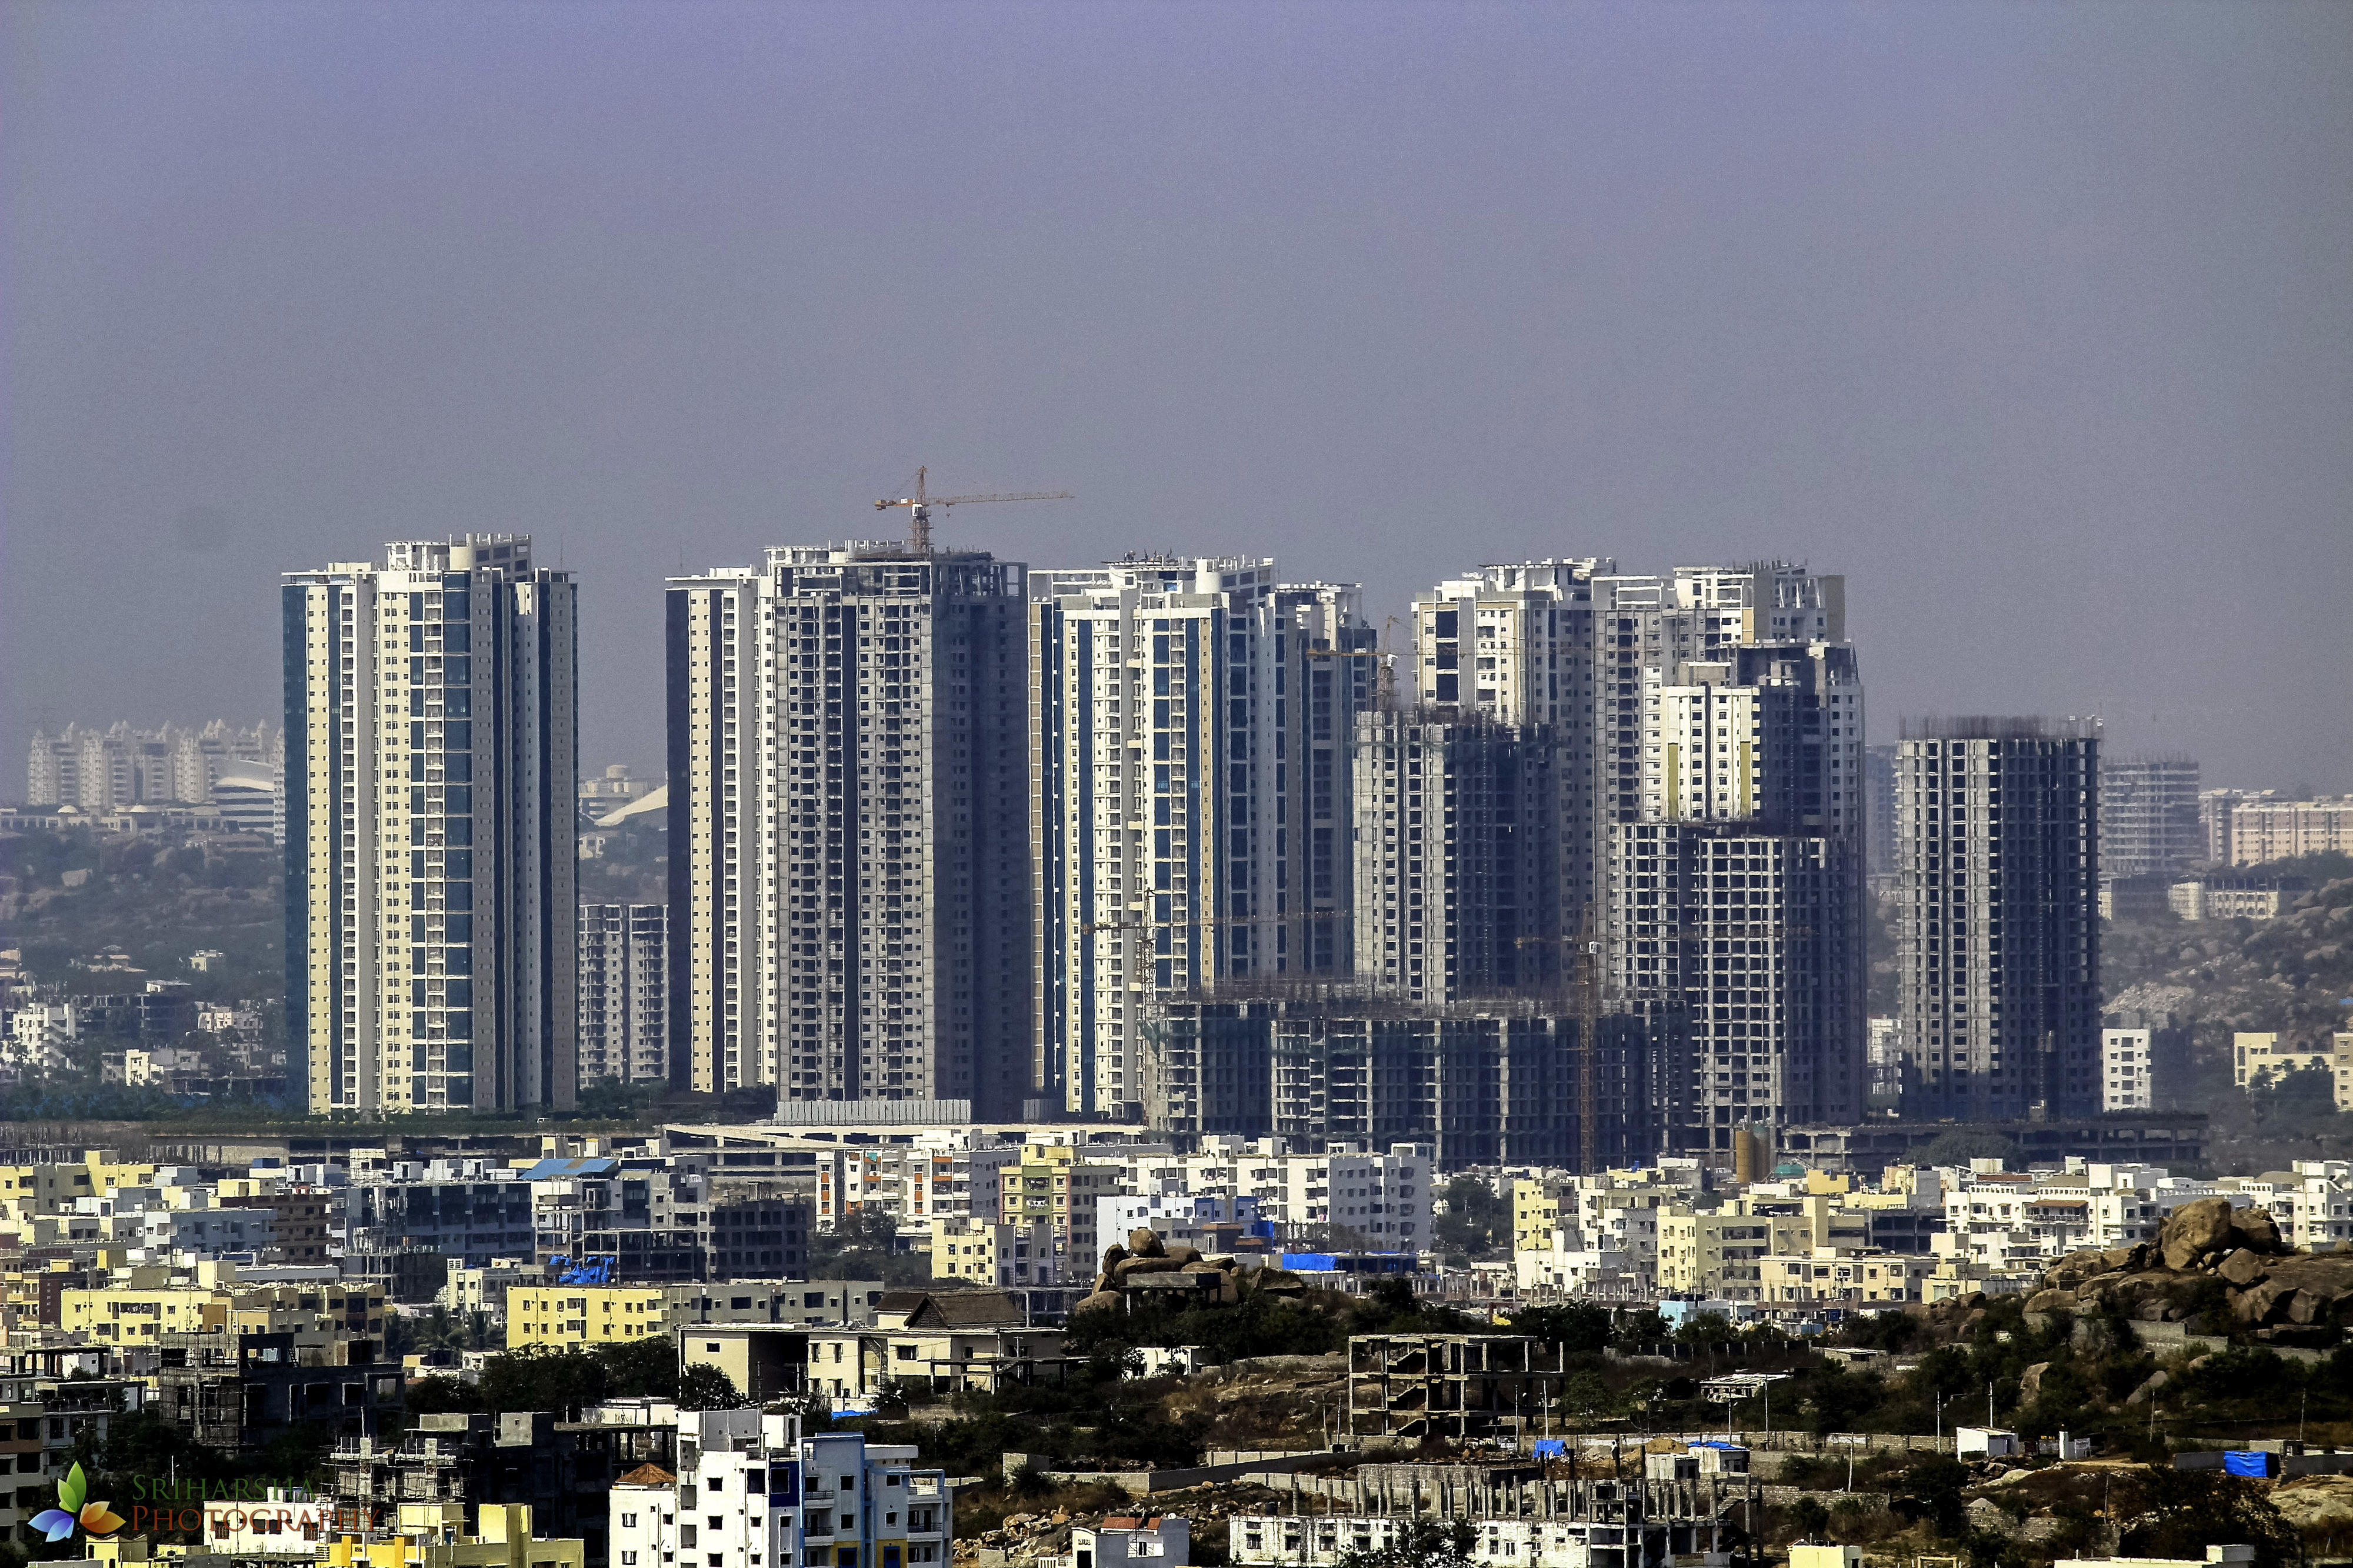 Skyline of Hyderabad, India